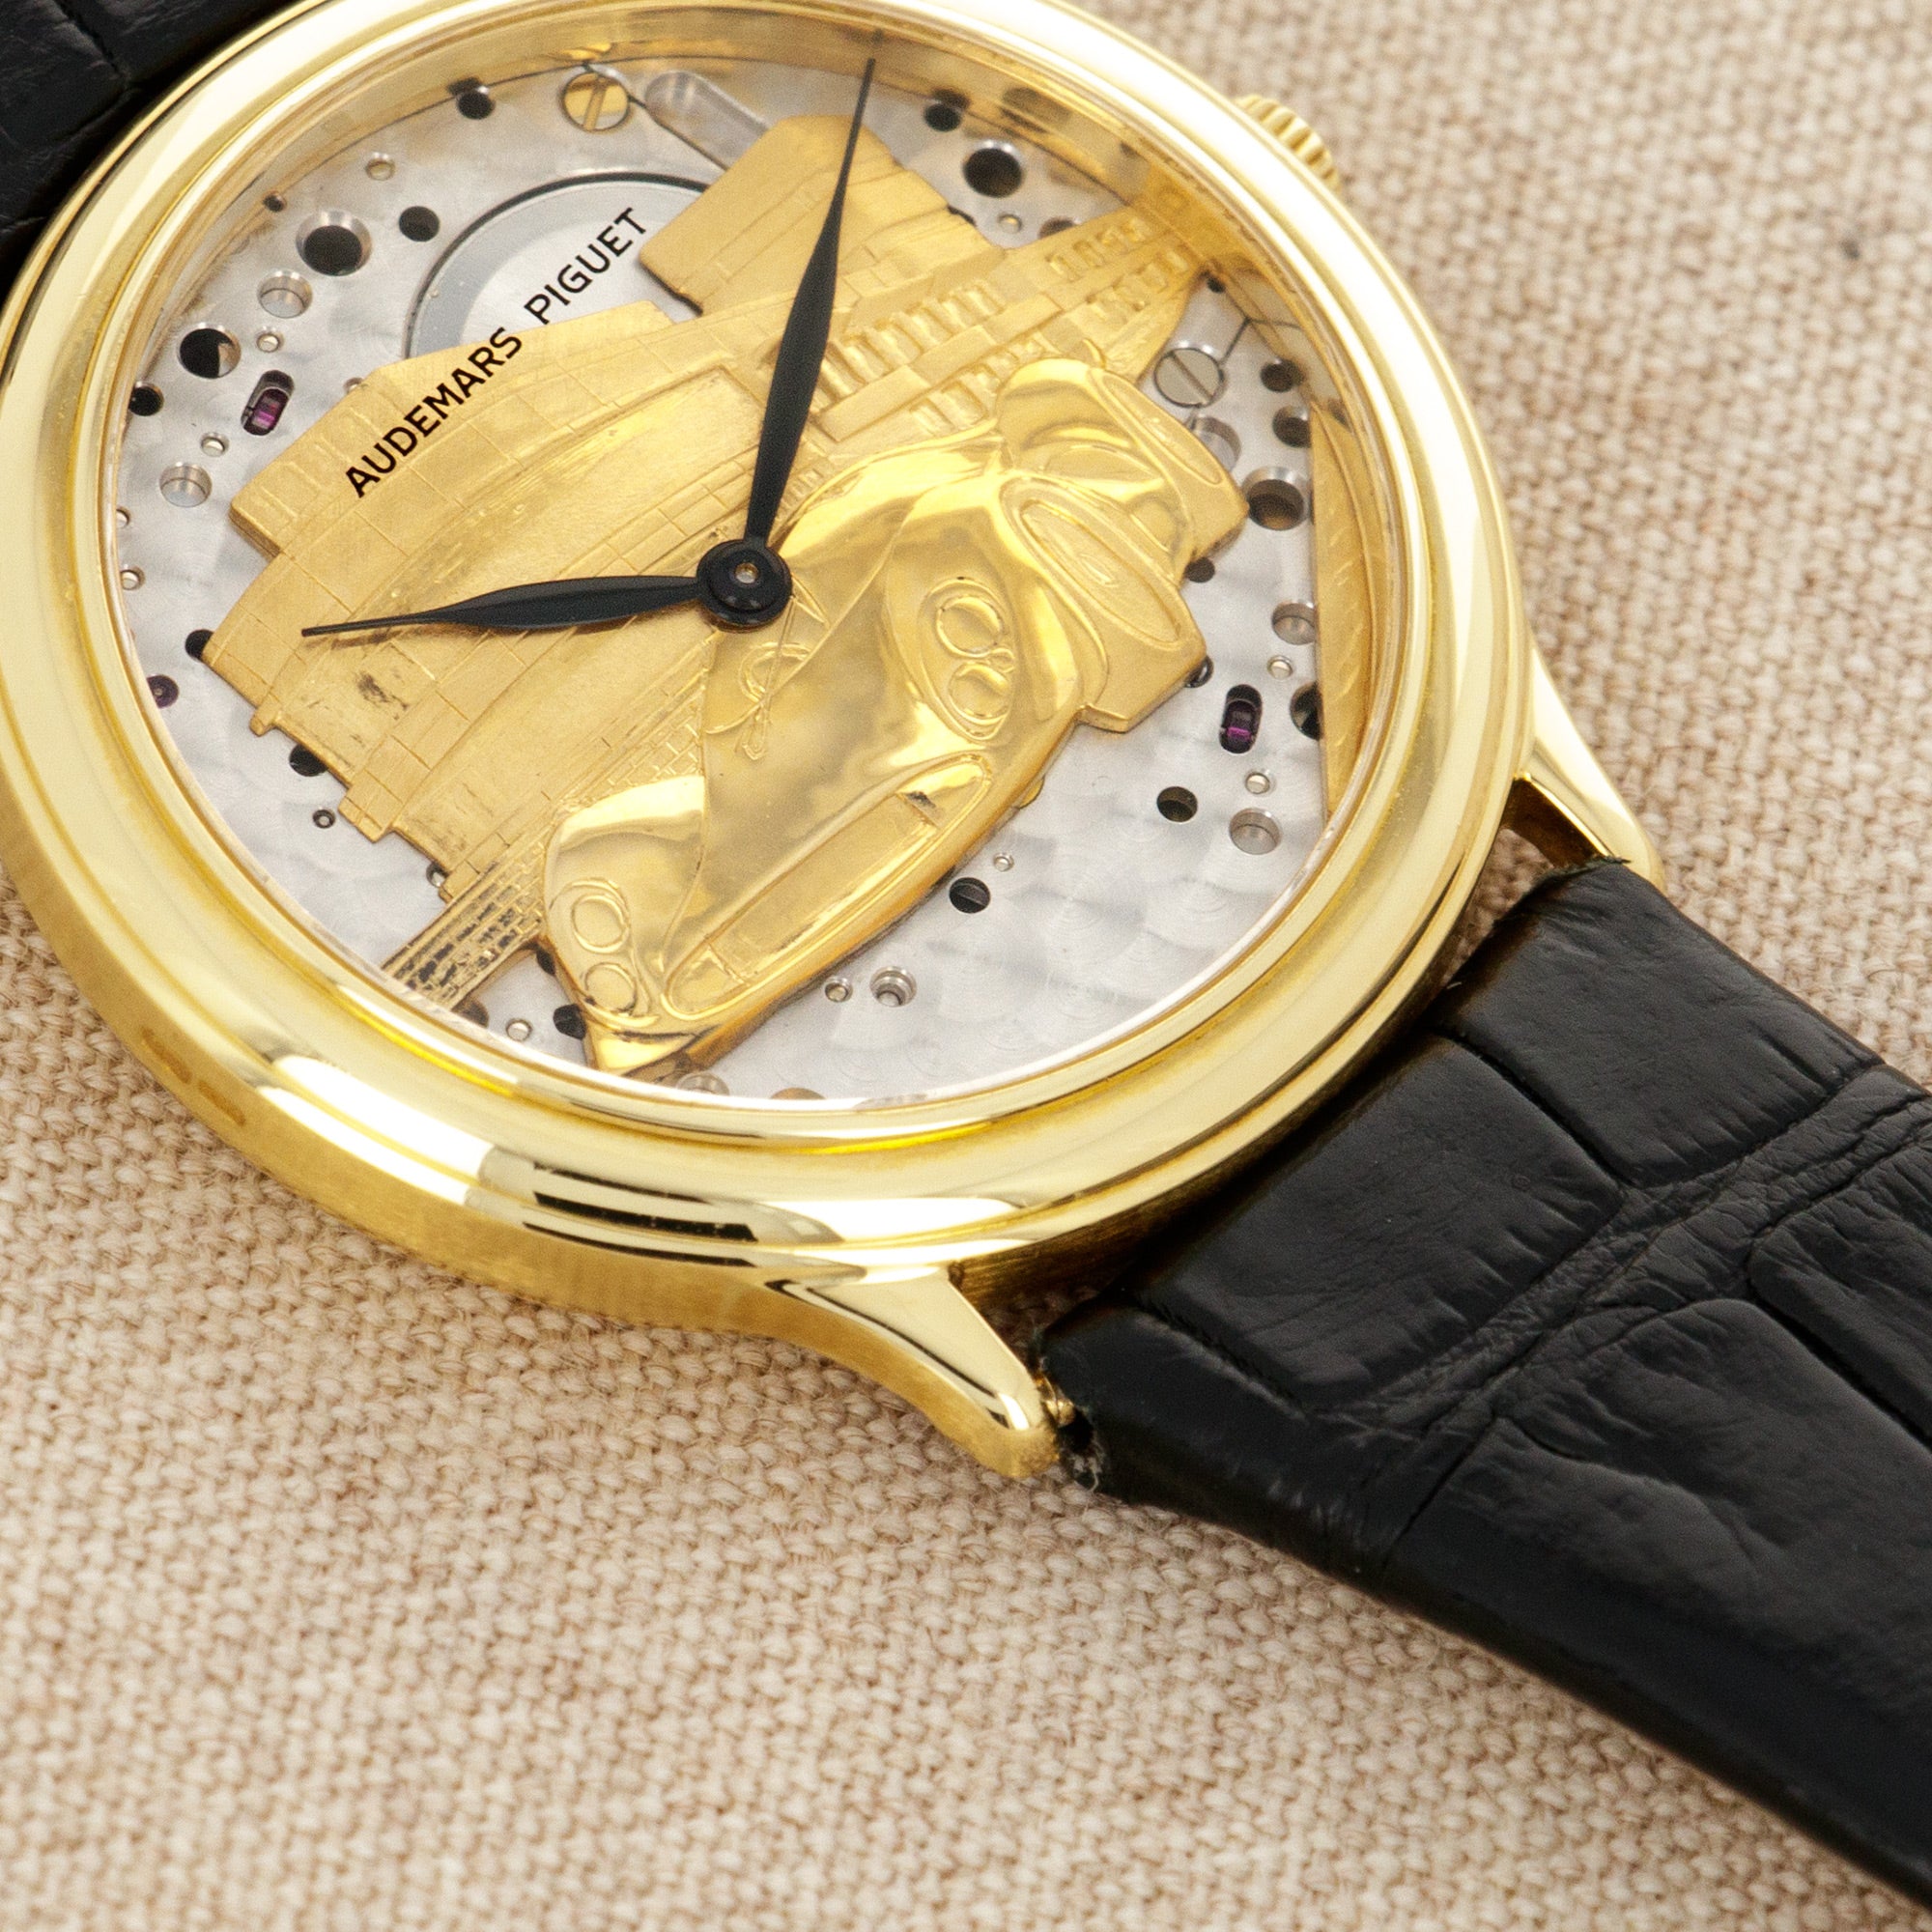 Audemars Piguet - Audemars Piguet Yellow Gold Watch Ref. 14677 with Skeletonized Le Mans Ferrari Dial - The Keystone Watches